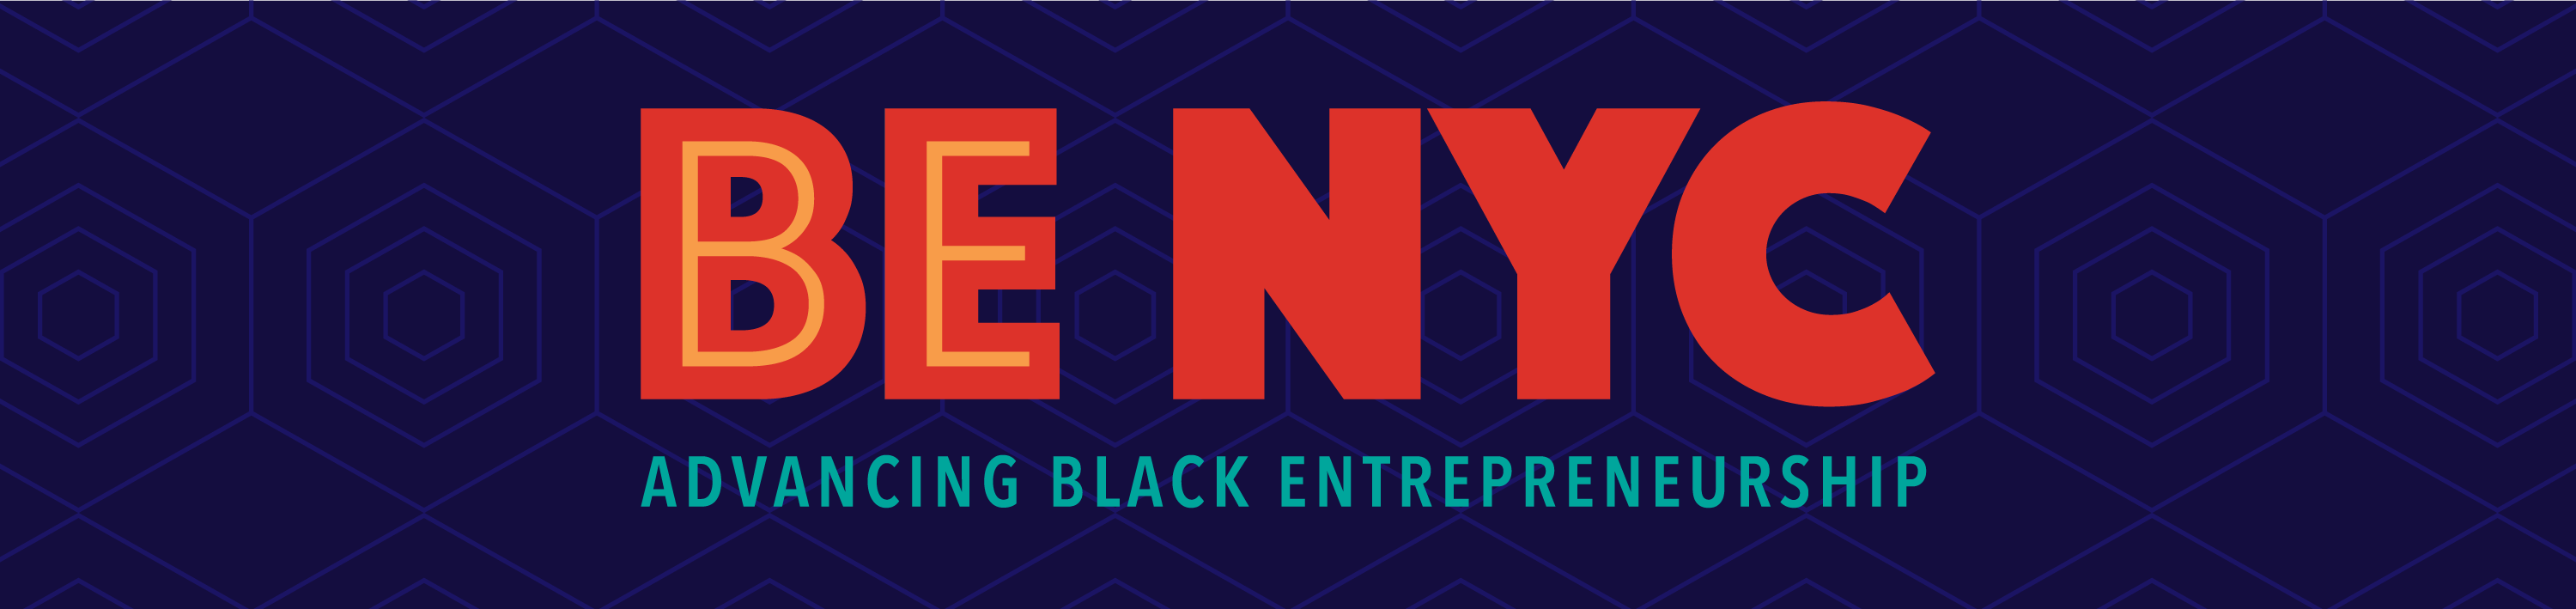 BE NYC - Advancing Black Entrepreneurship